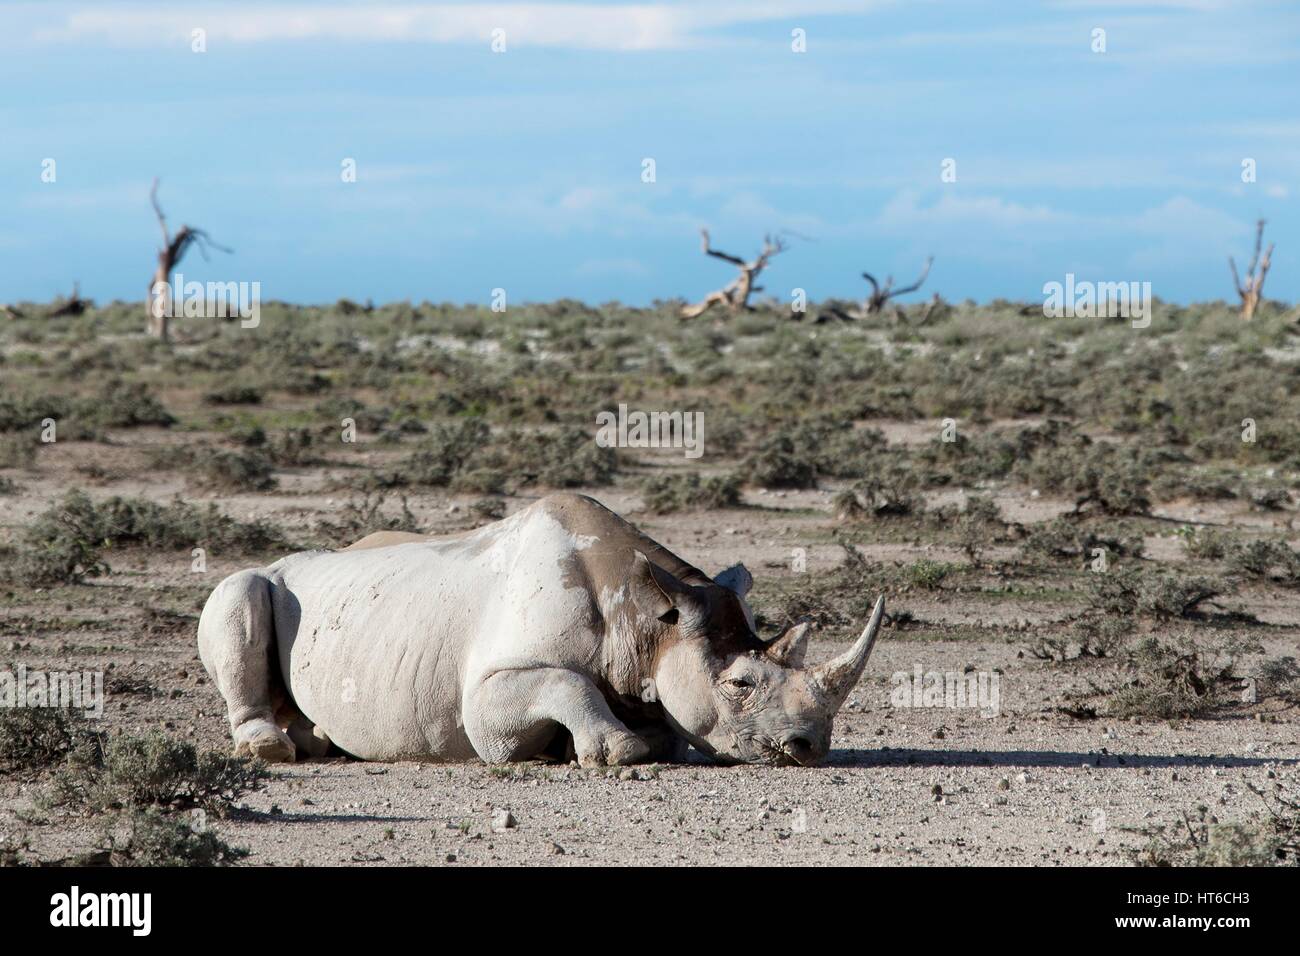 A Sleeping black rhino covered in white mud in Etosha Stock Photo